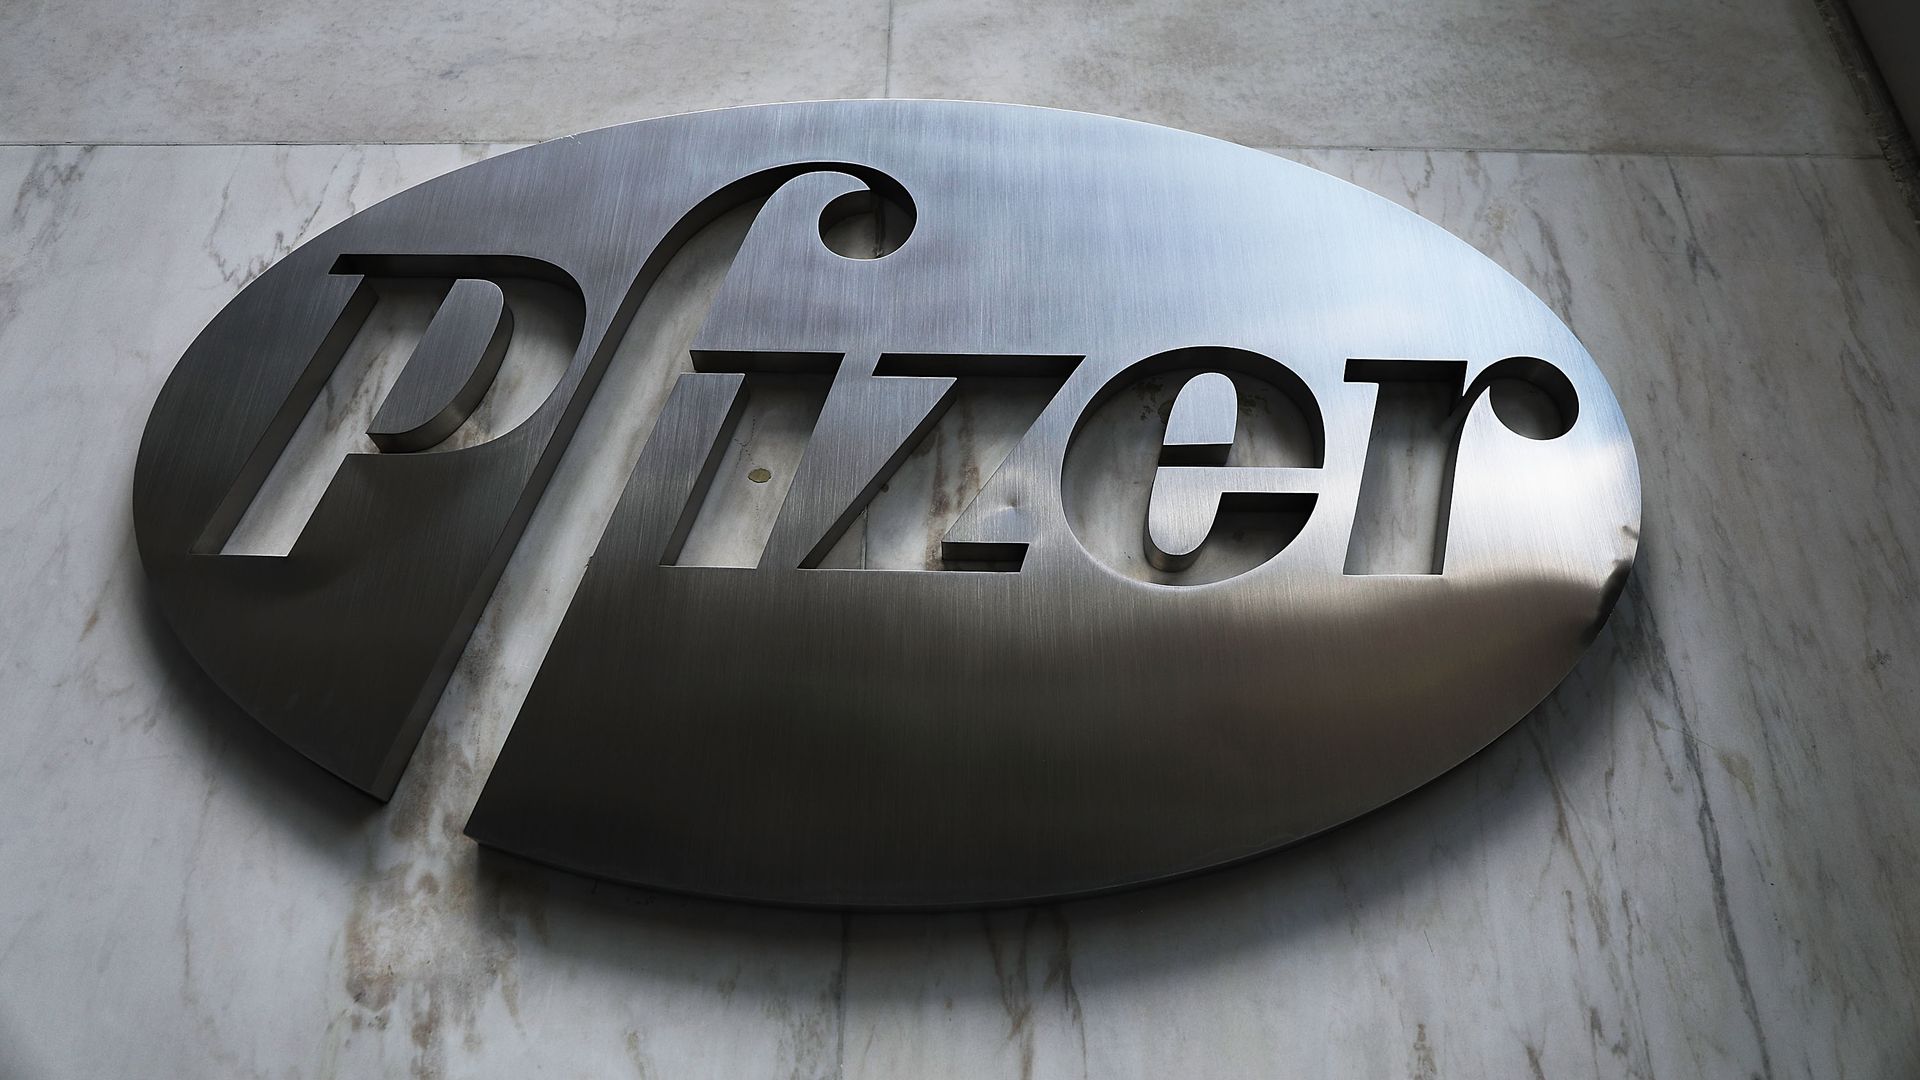 Pfizer's logo on its headquarters building.